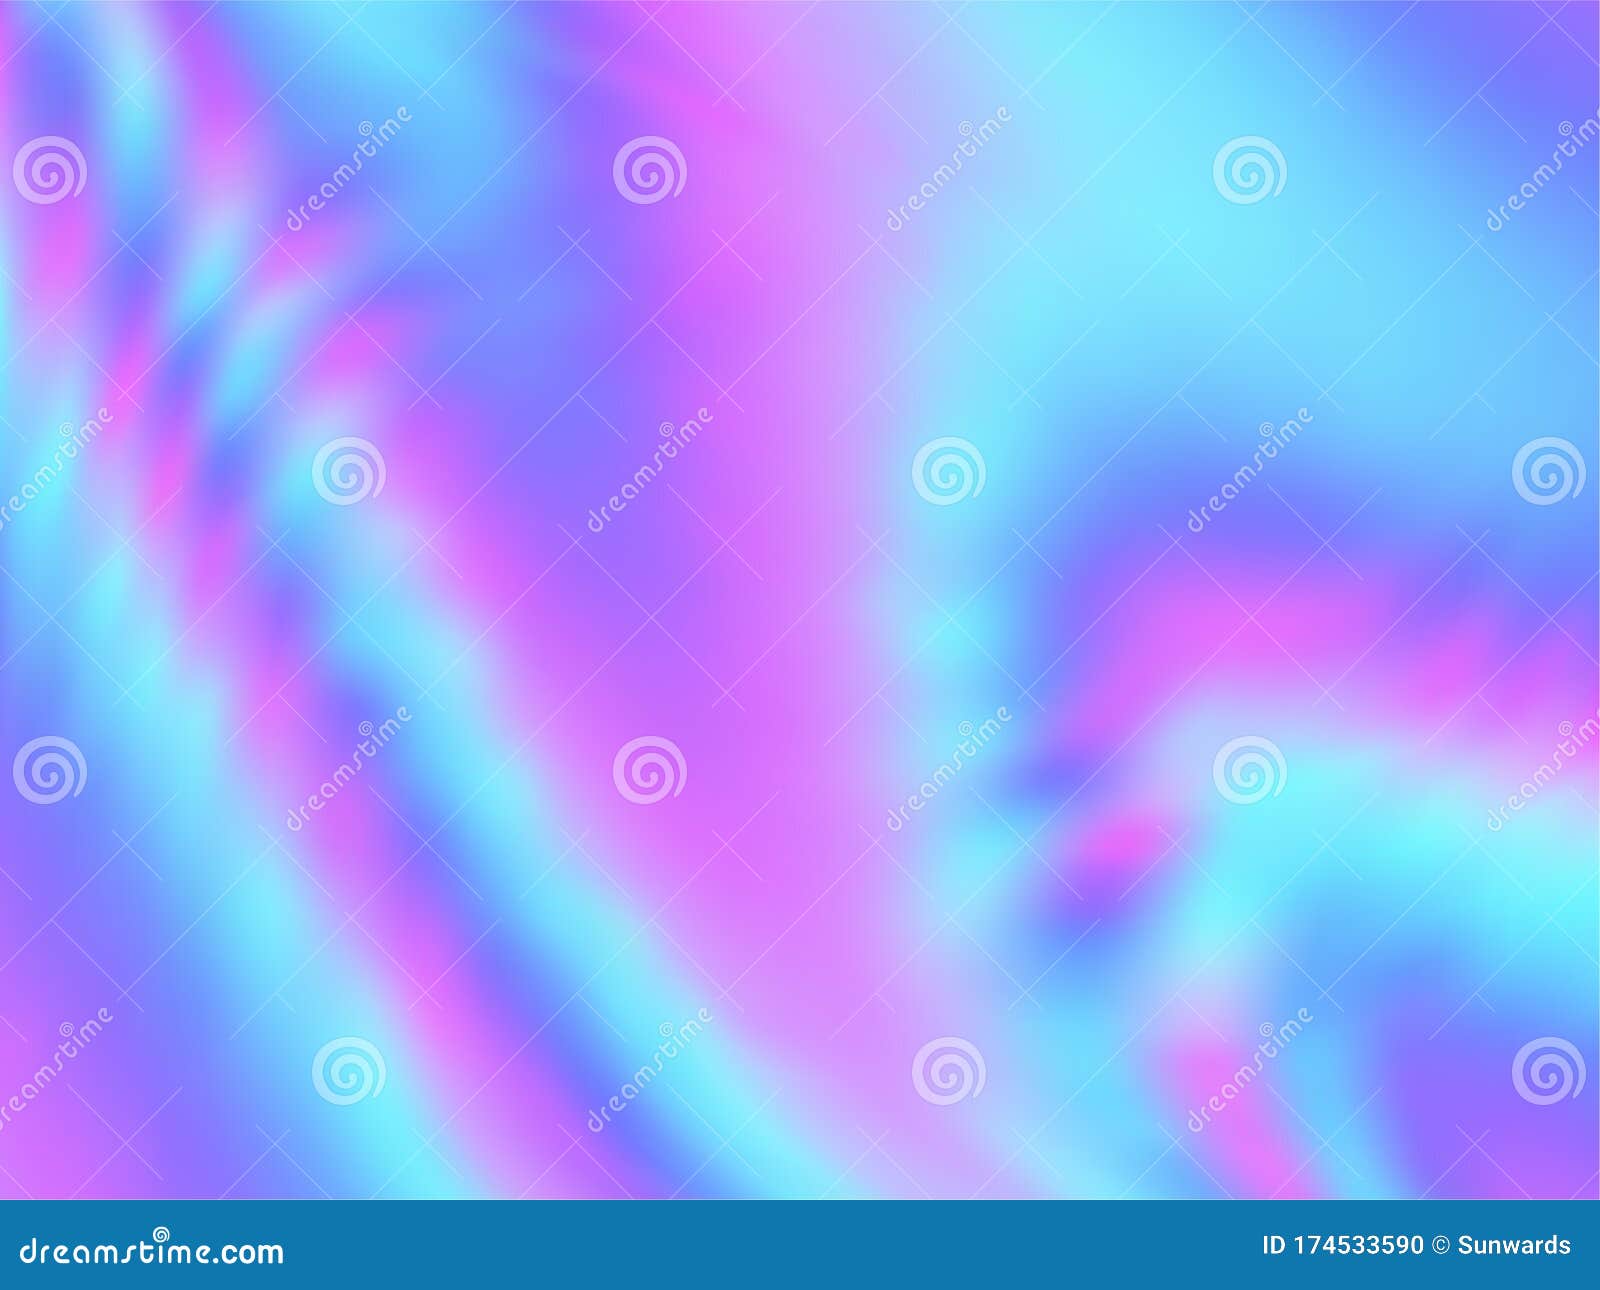 blurred hologram texture gradient wallpaper.